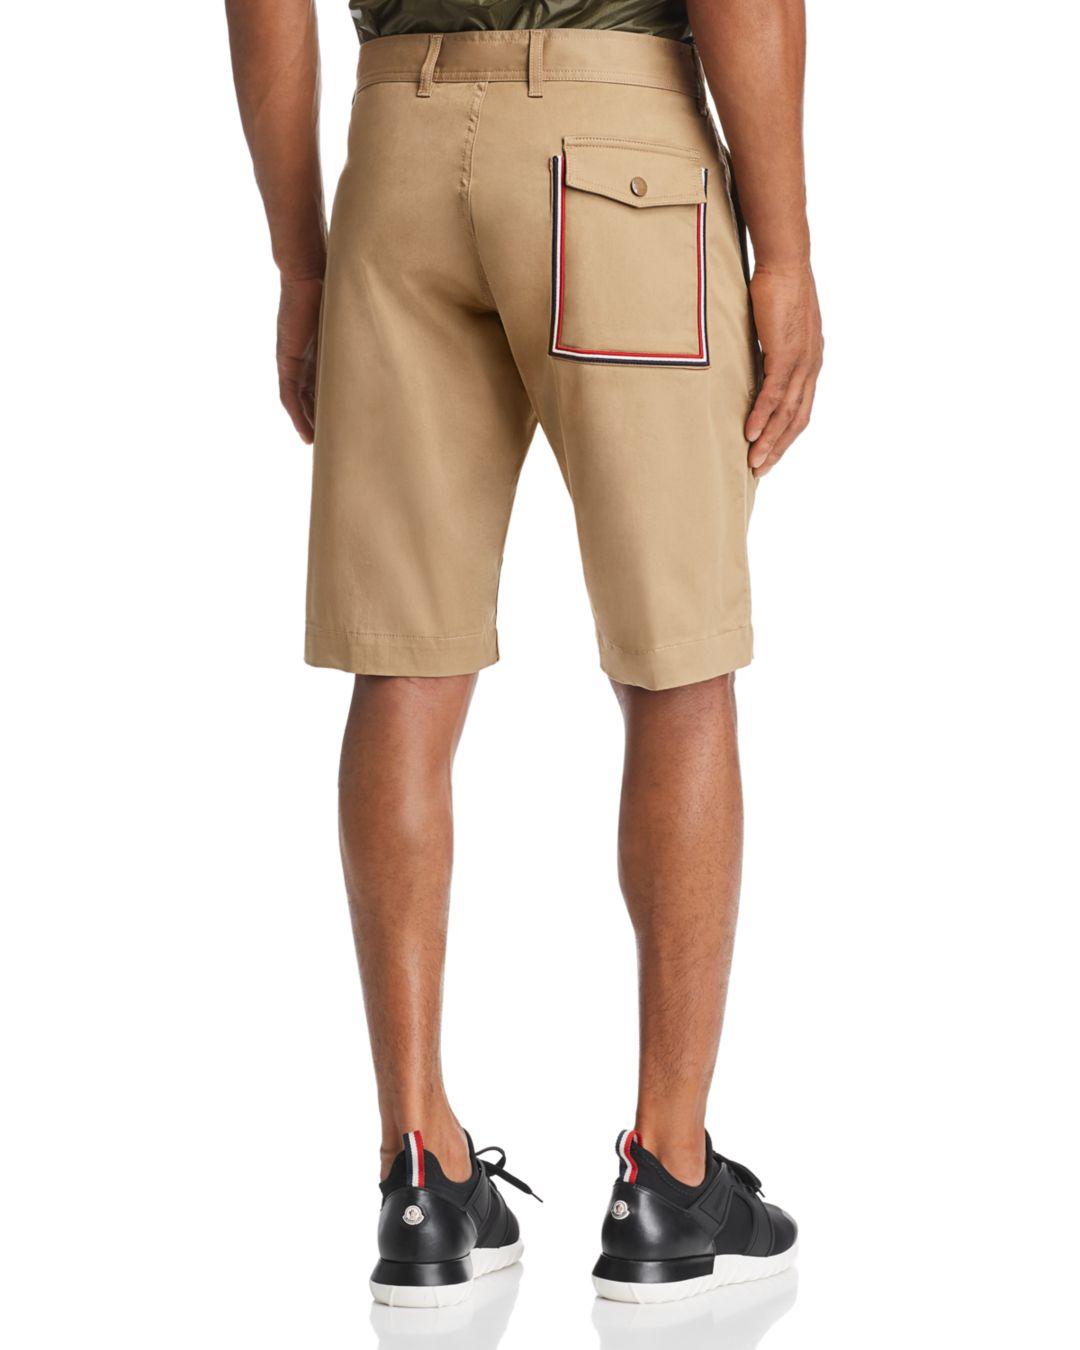 Moncler Bermuda Shorts in Dark Brown (Brown) for Men - Lyst